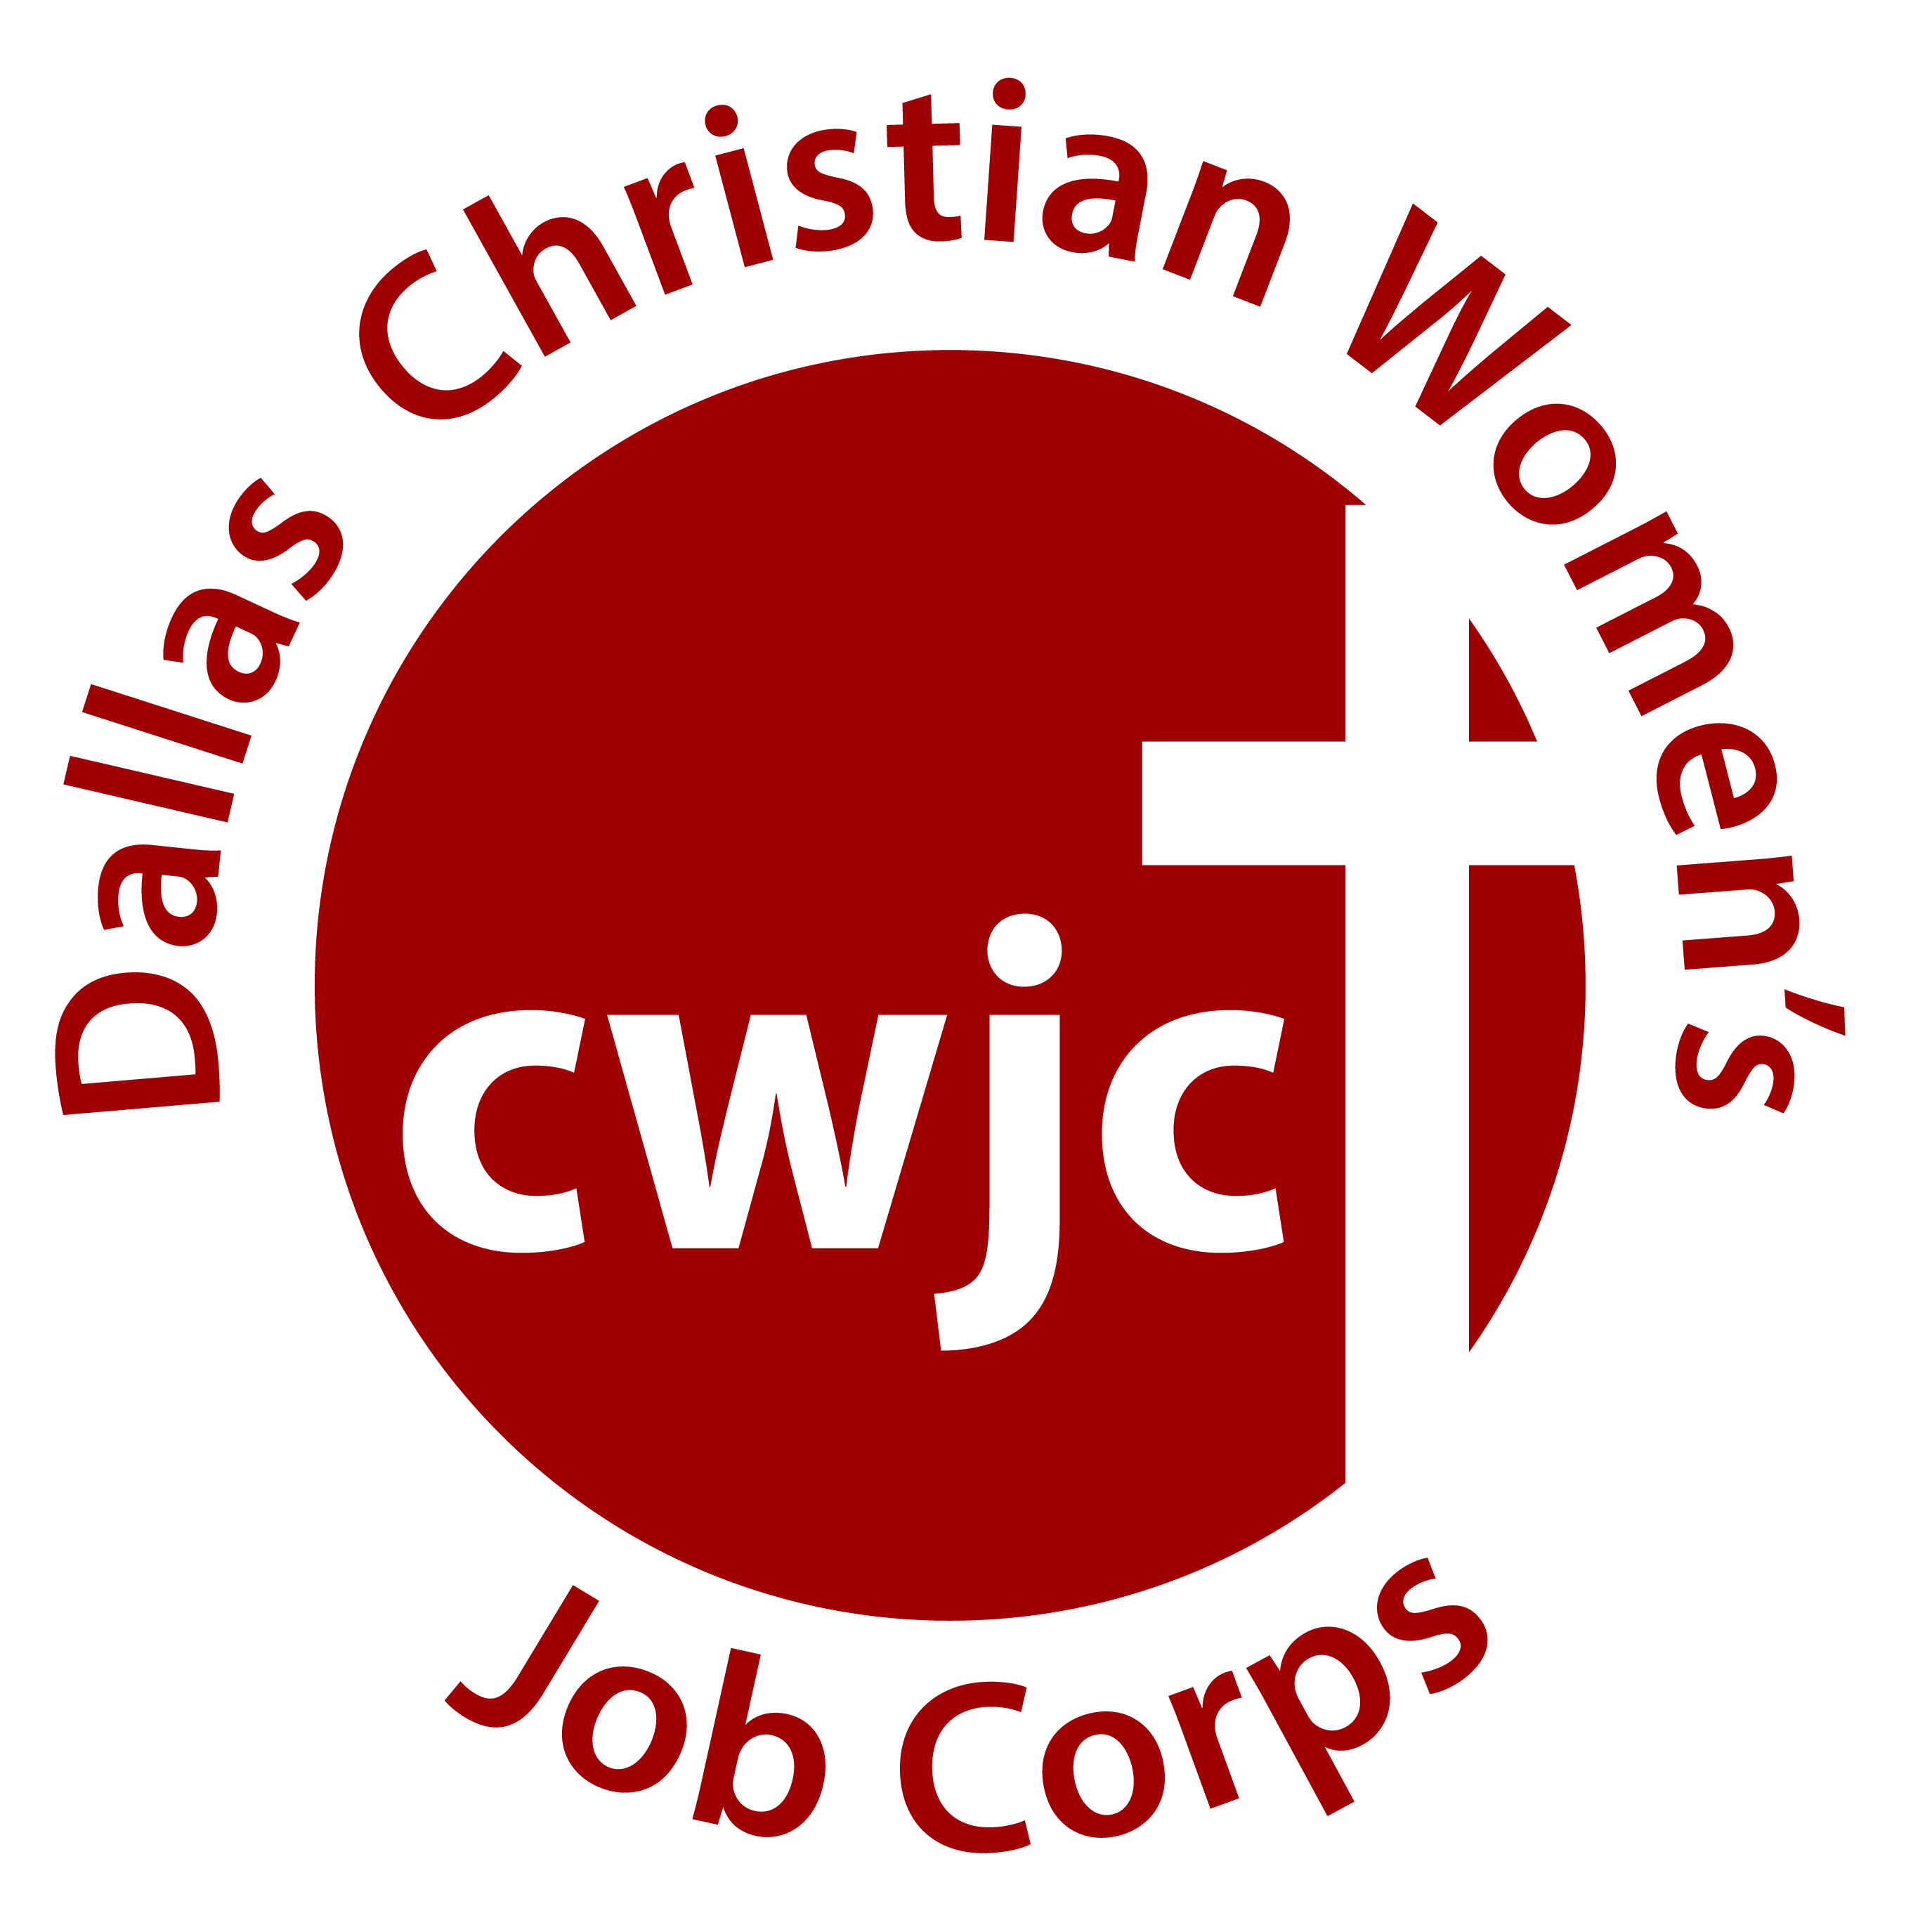 Dallas Christian Woman's Job Corps